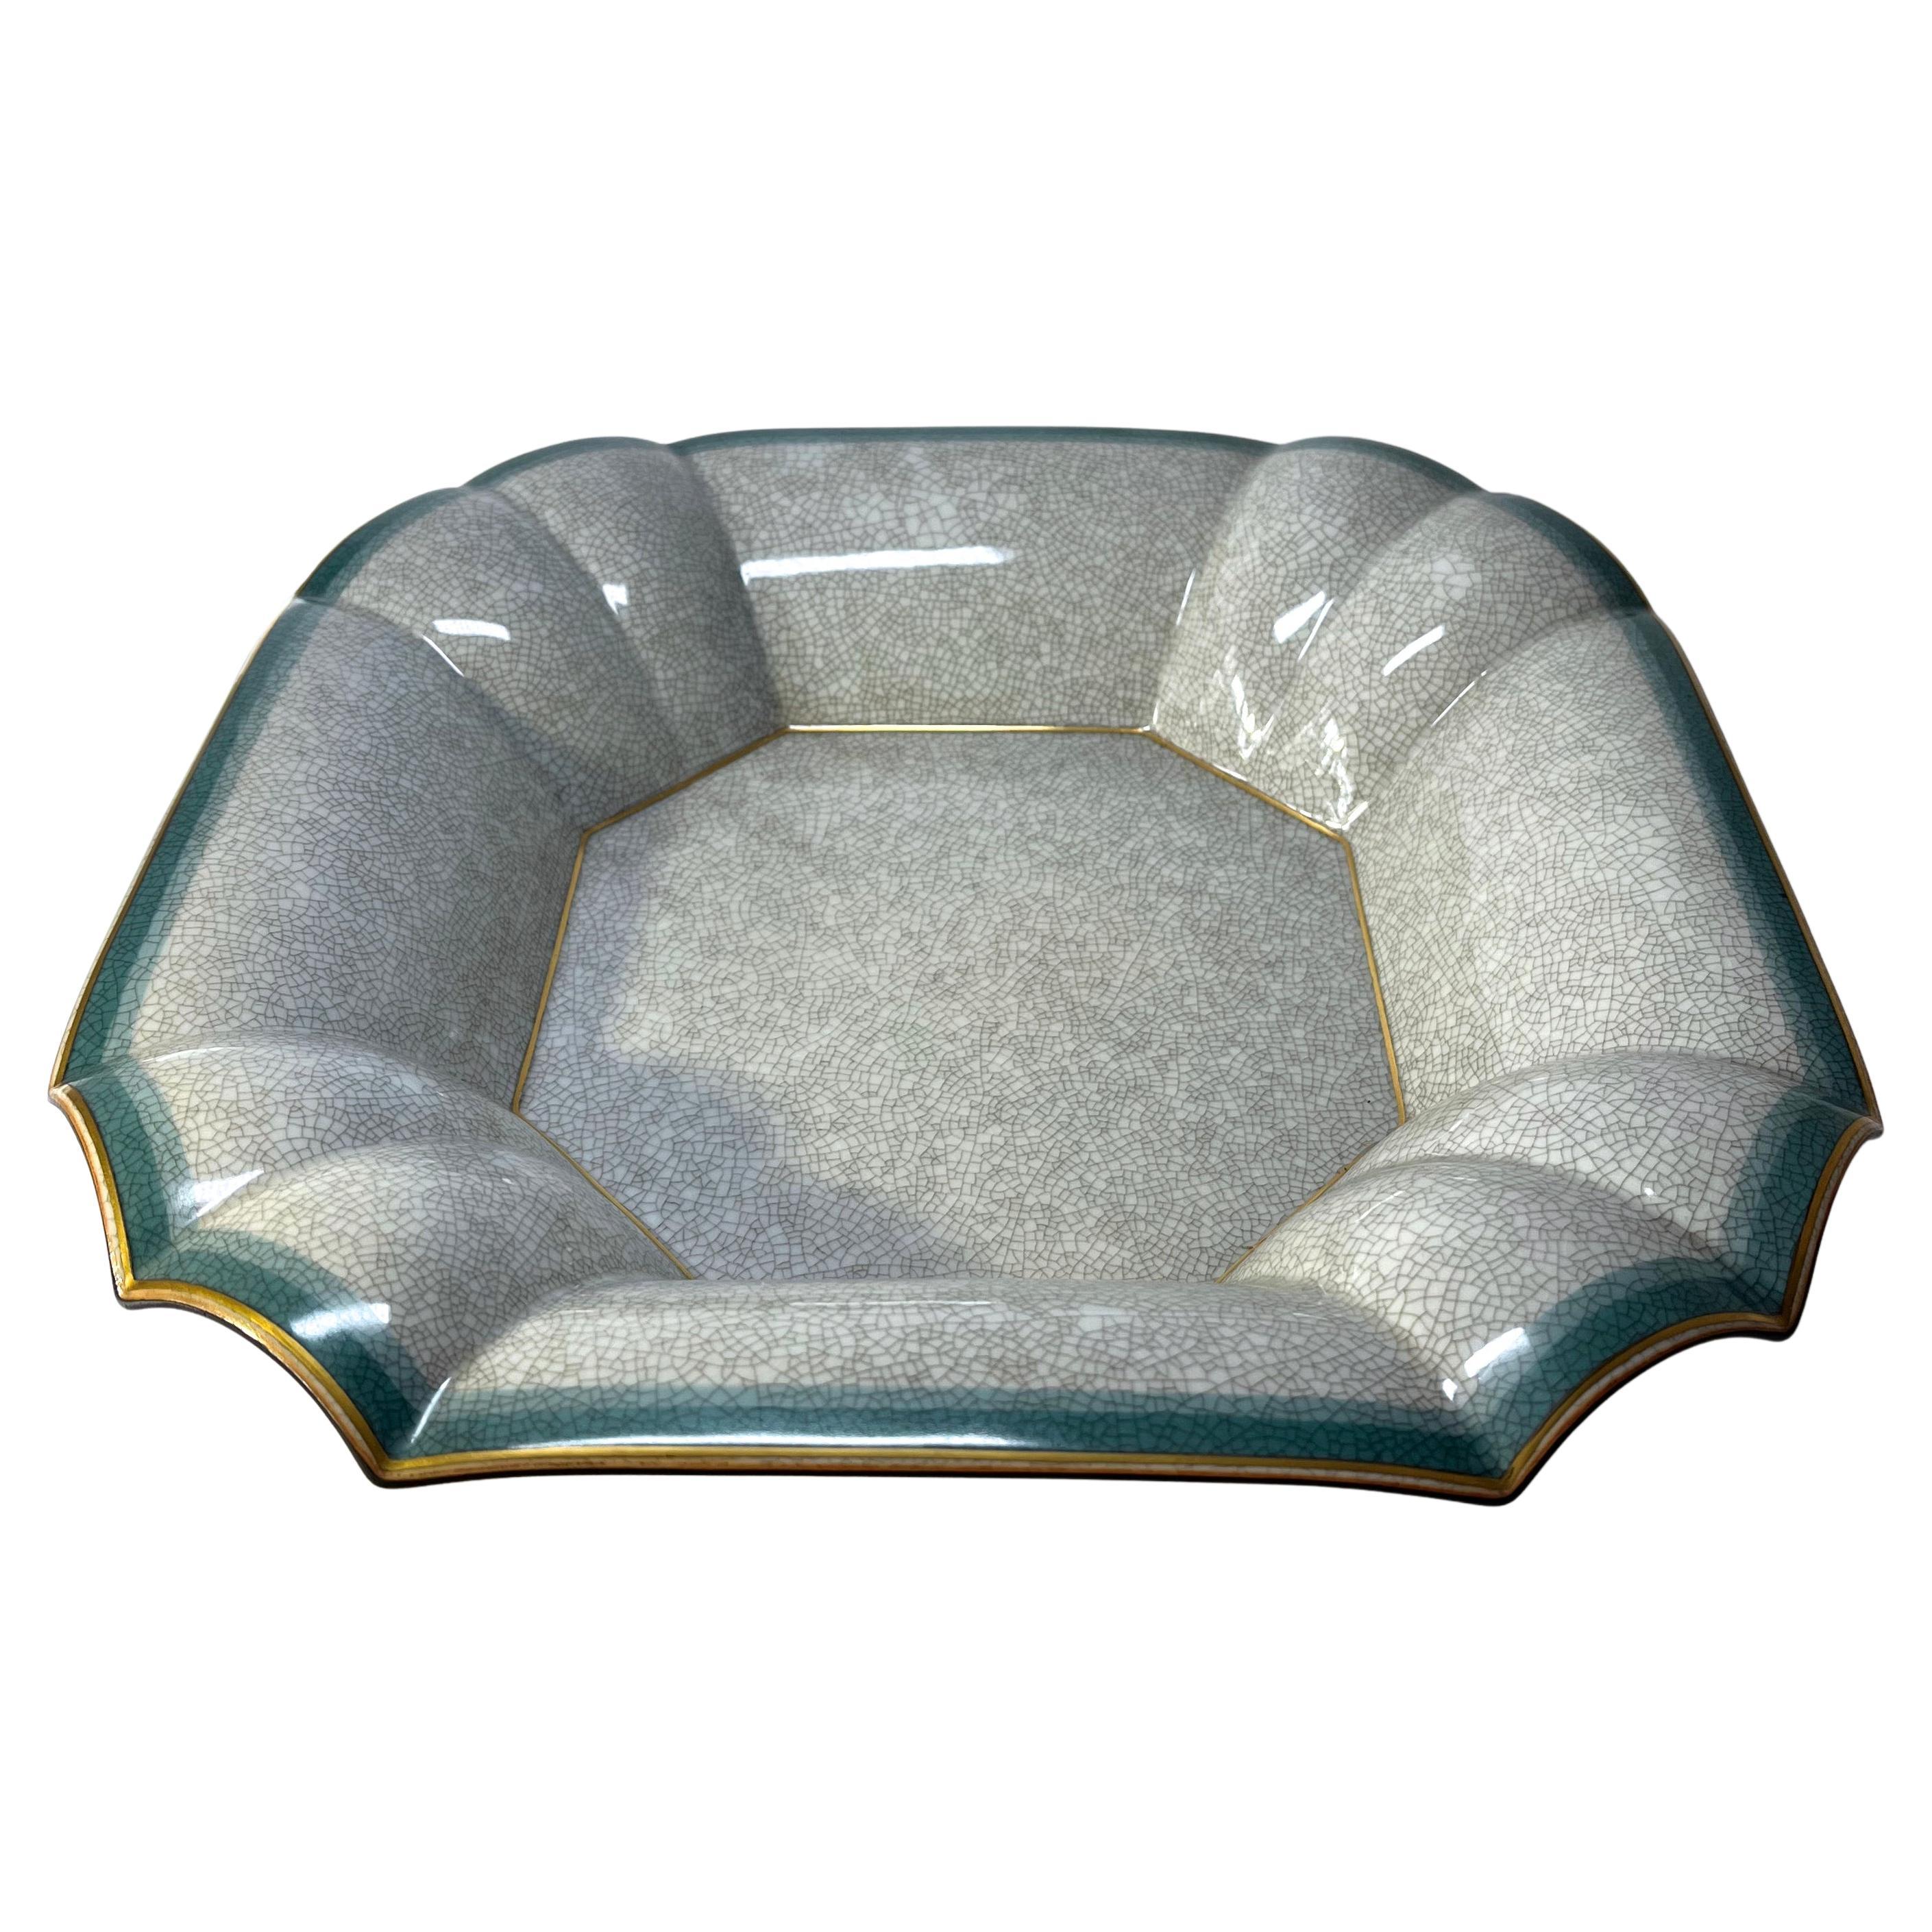 Thorkild Olsen Beautiful Tones Of Teal & Grey, Crackle Glazed Dual Purpose Bowl  For Sale